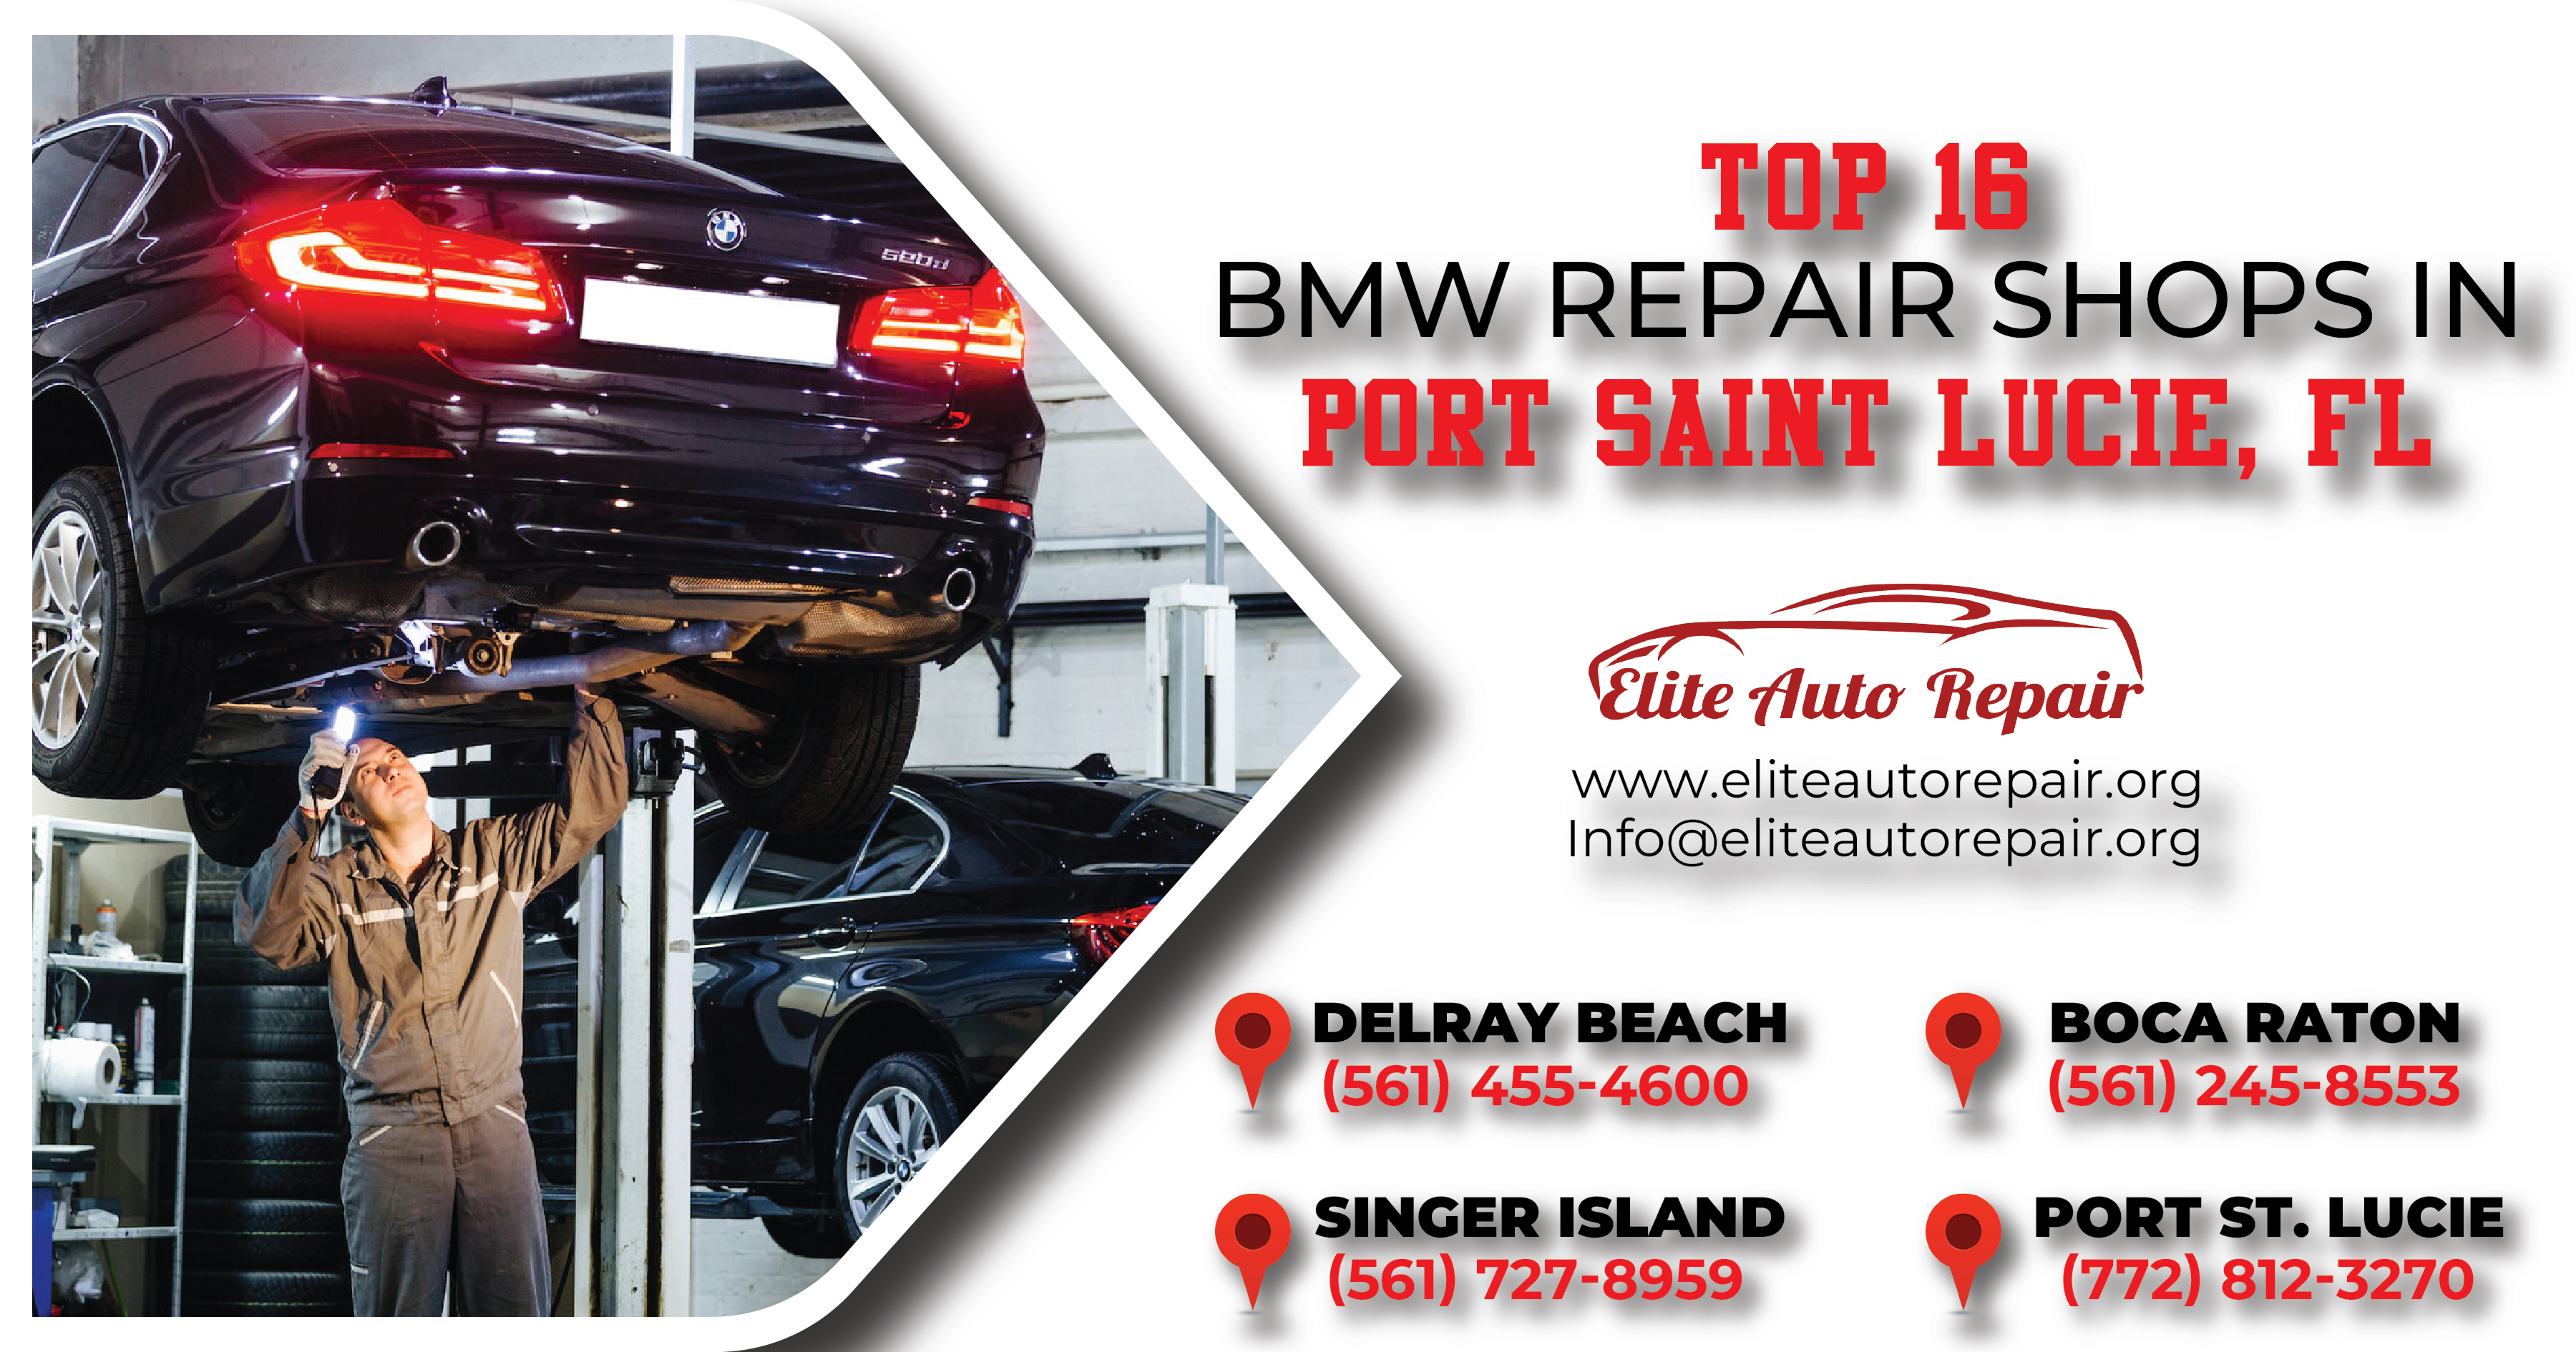 Top 16 BMW Repair Shops in Port Saint Lucie, FL